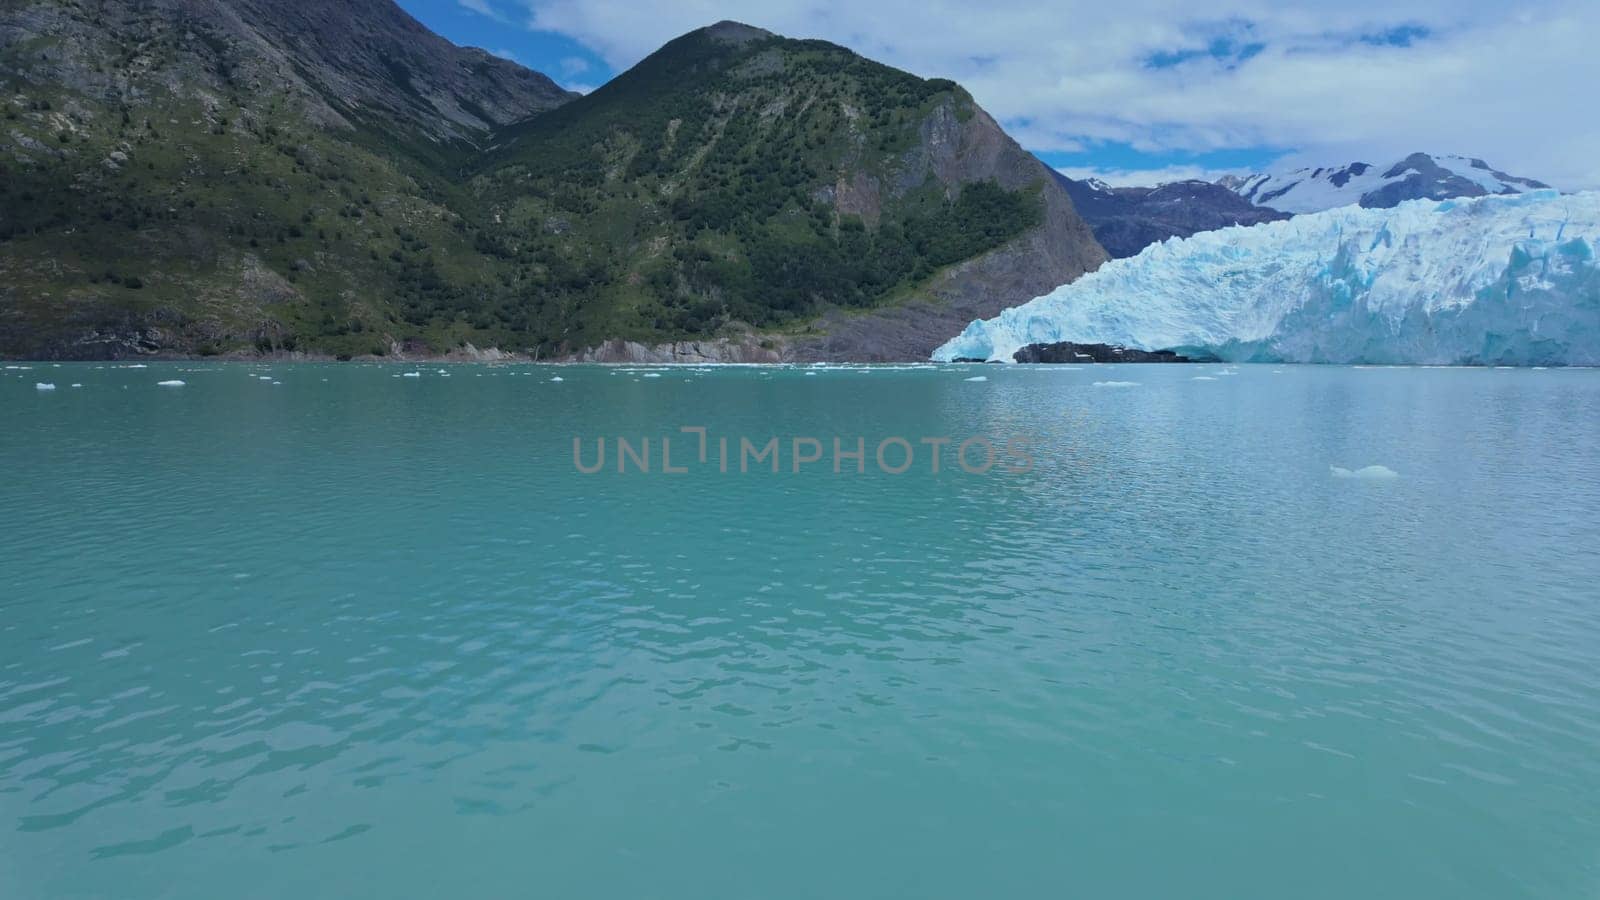 Journey Towards a Glacier on a Turquoise Glacier Lake by FerradalFCG